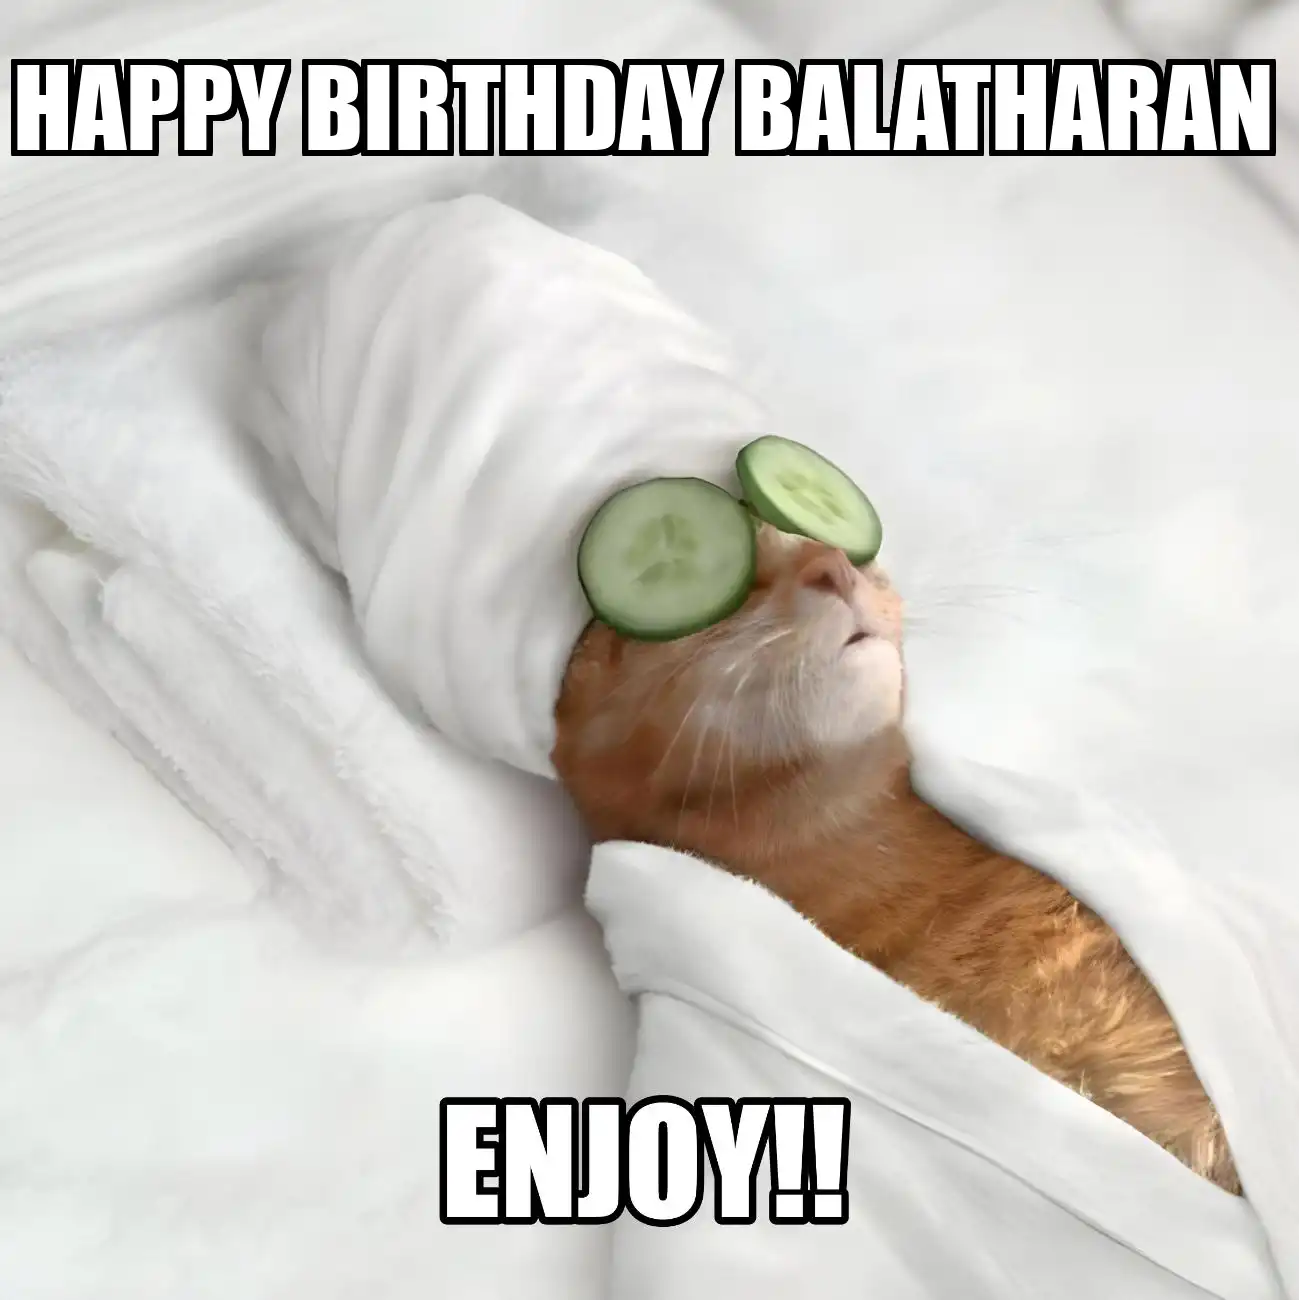 Happy Birthday Balatharan Enjoy Cat Meme